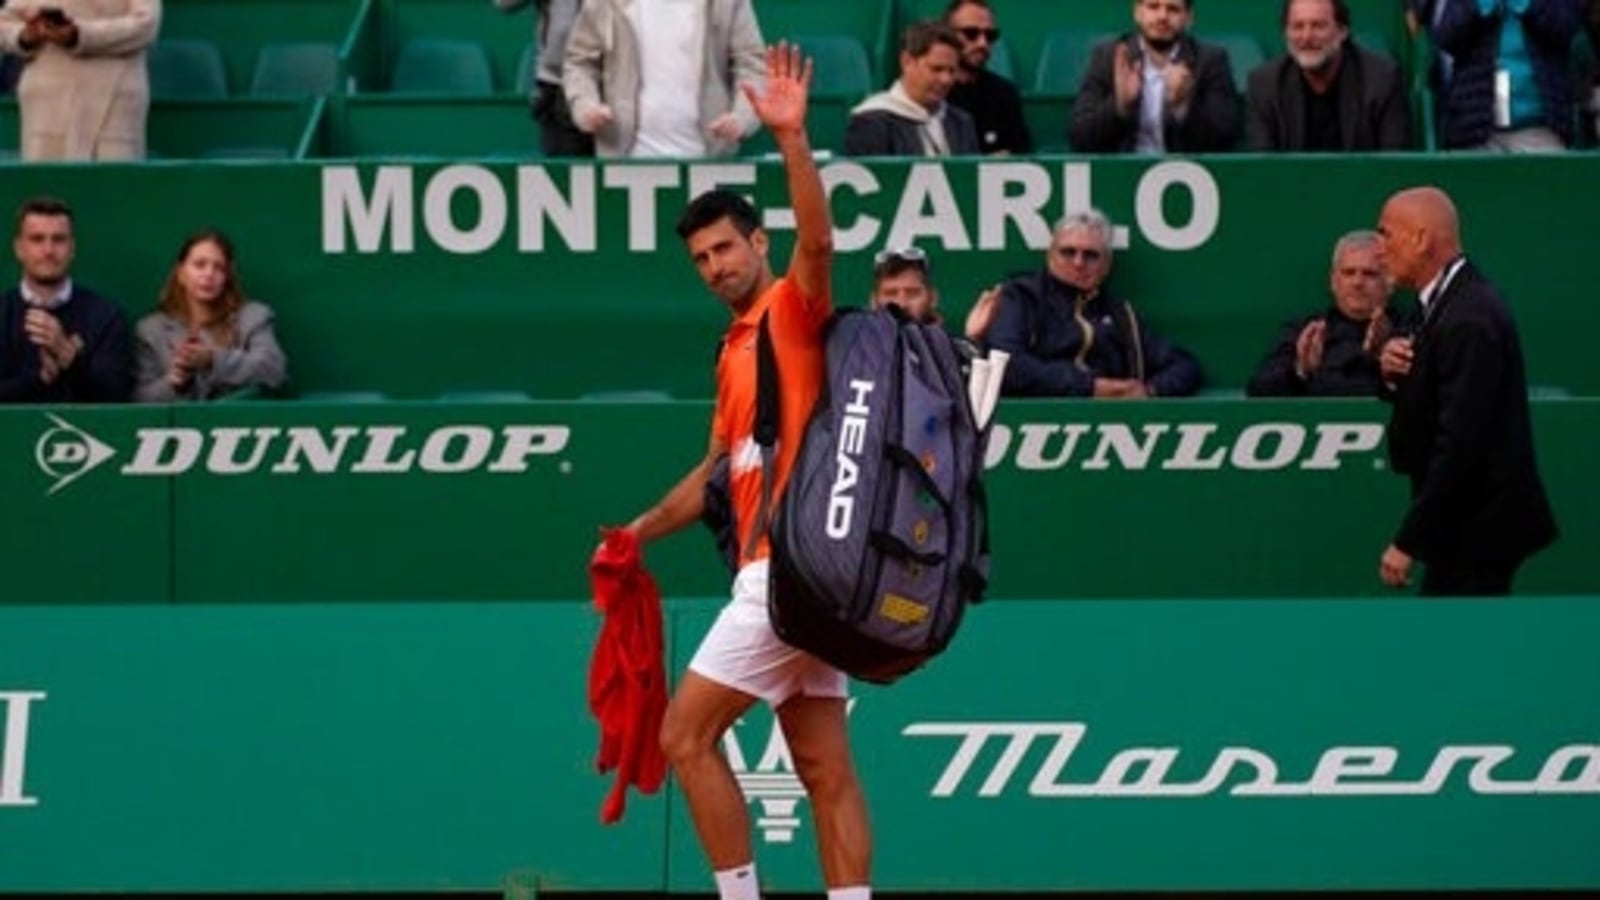 Novak Djokovic loses to Davidovich Fokina in opening match at Monte Carlo Tennis News